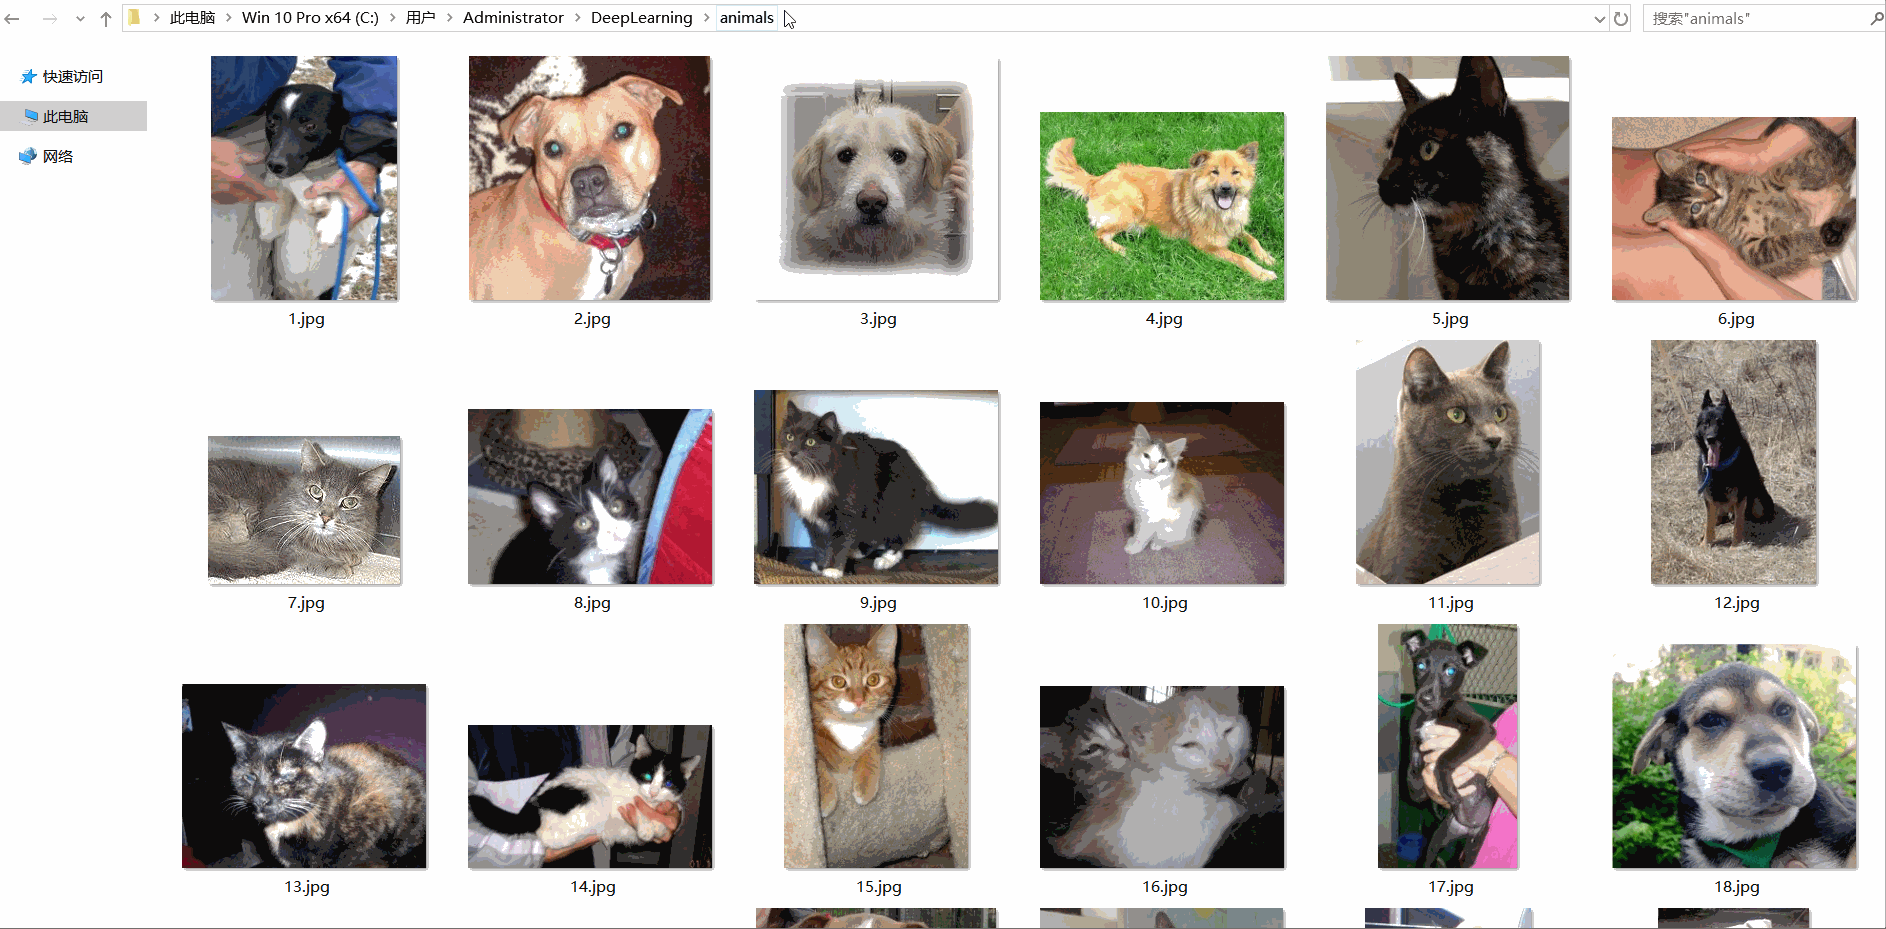 tensorflow+k-means聚类简单实现猫狗图像分类的方法